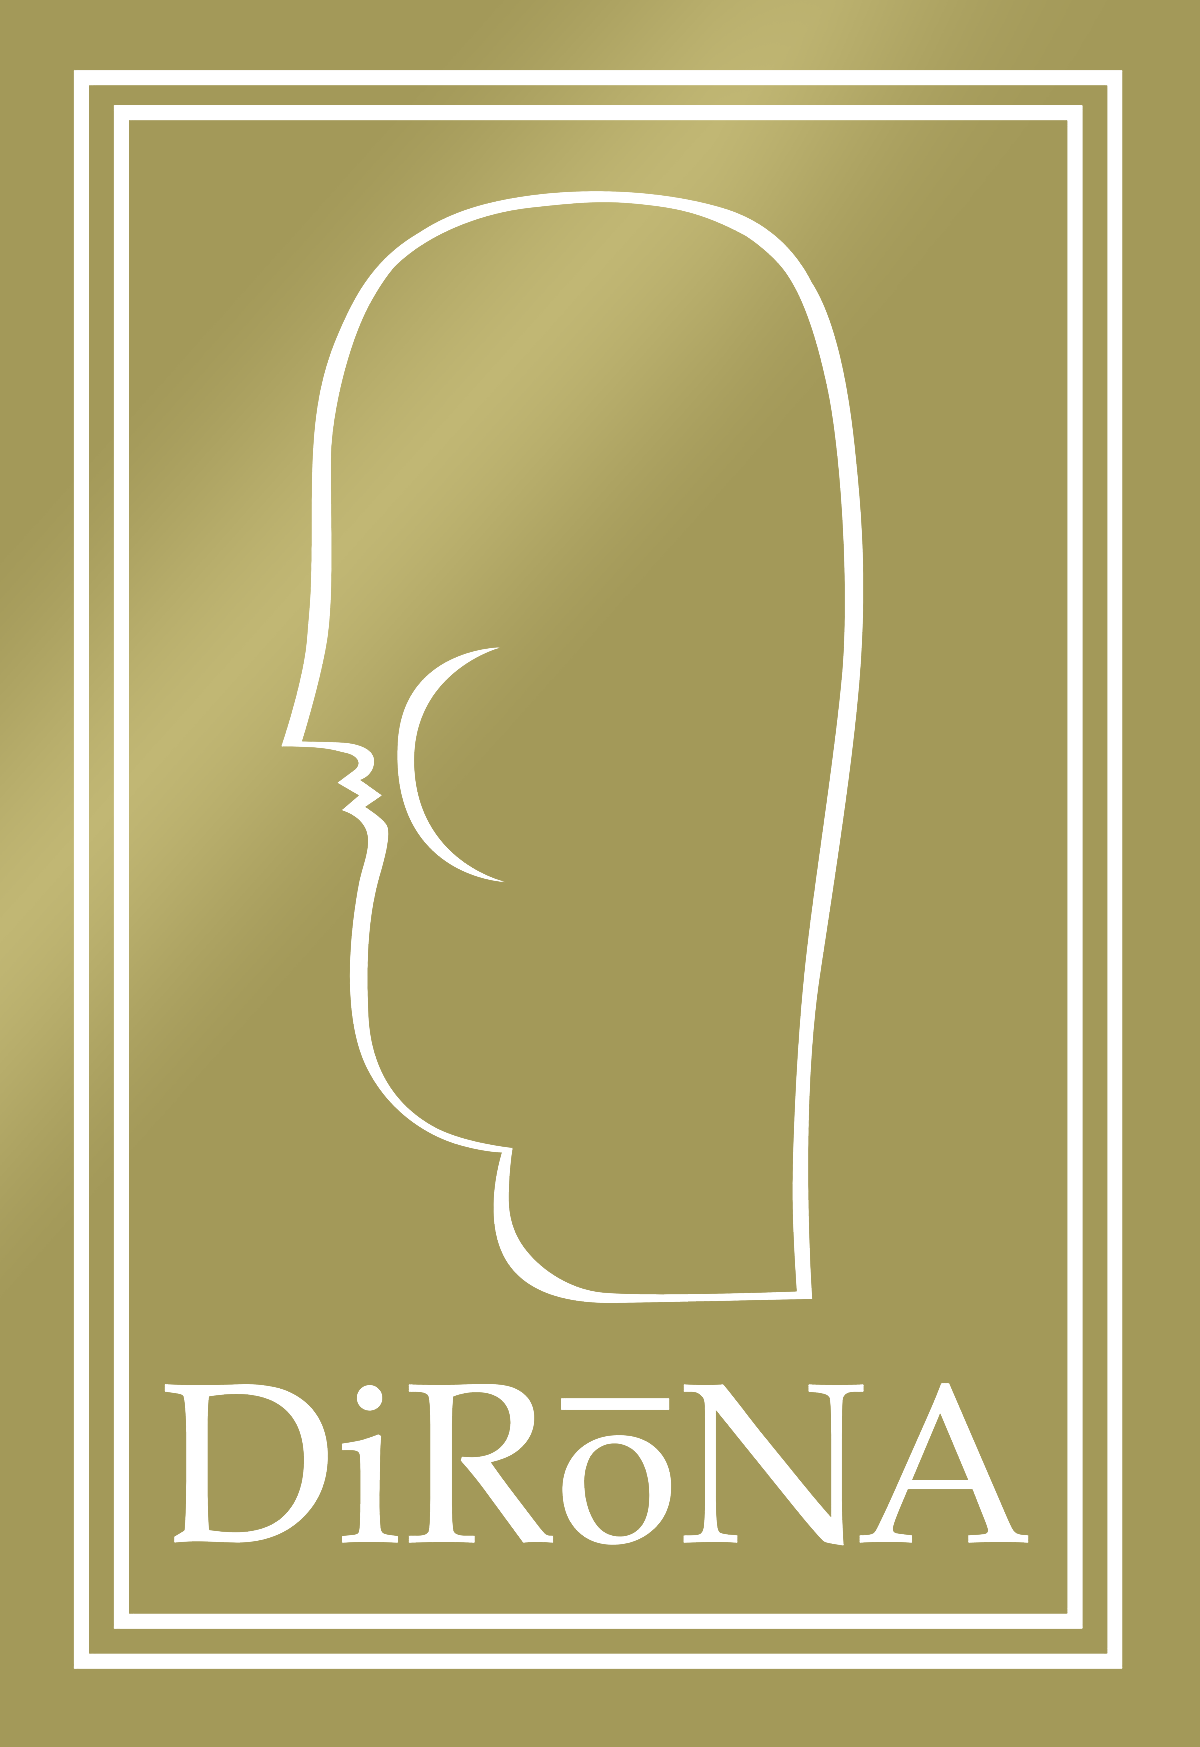 DiRona